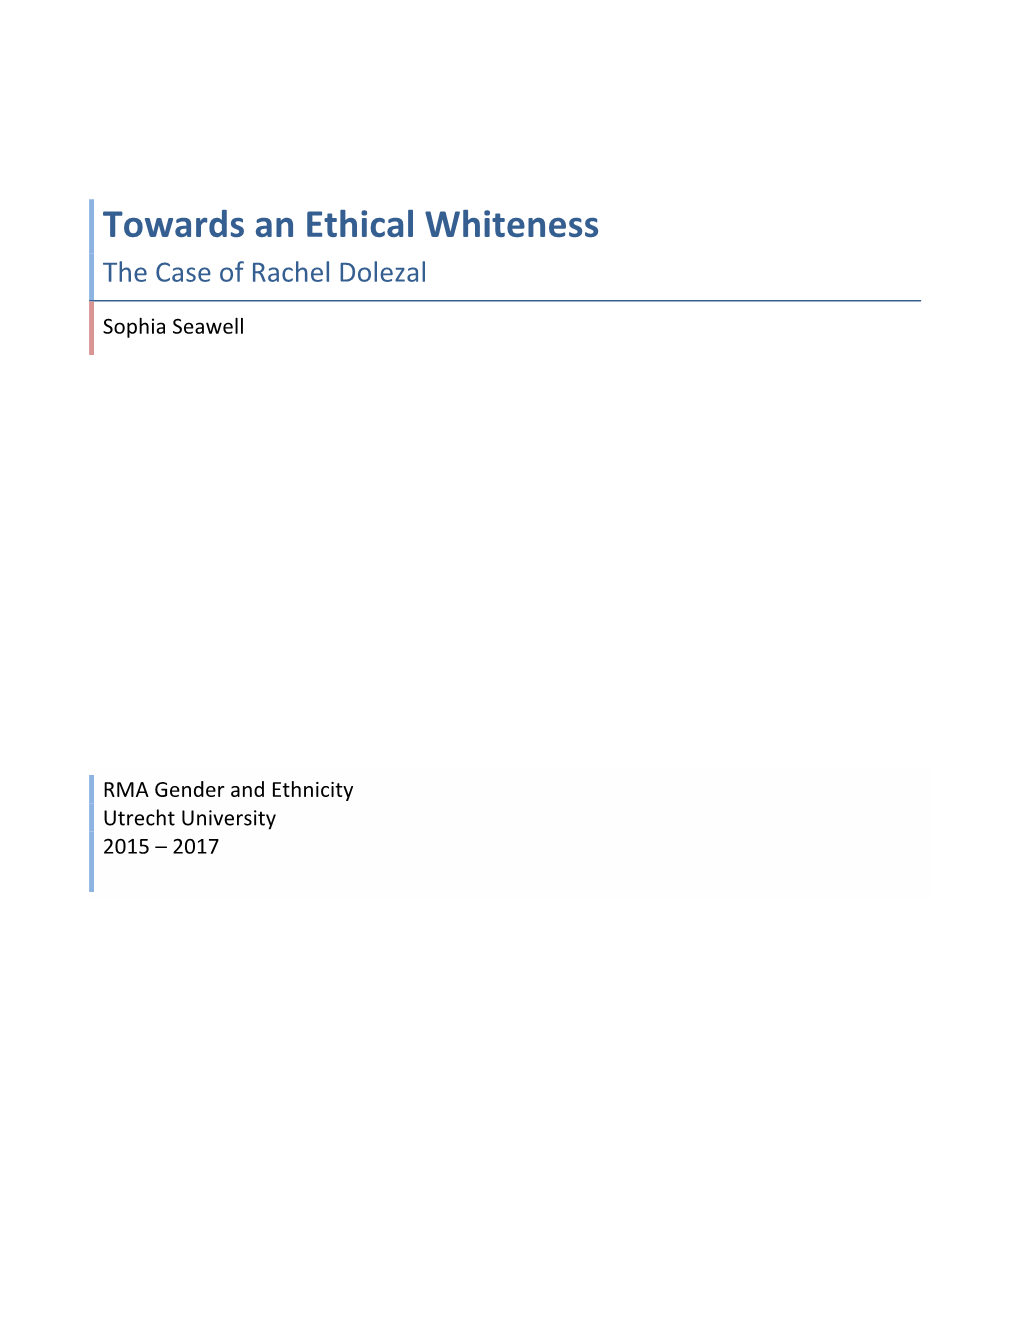 Towards an Ethical Whiteness the Case of Rachel Dolezal